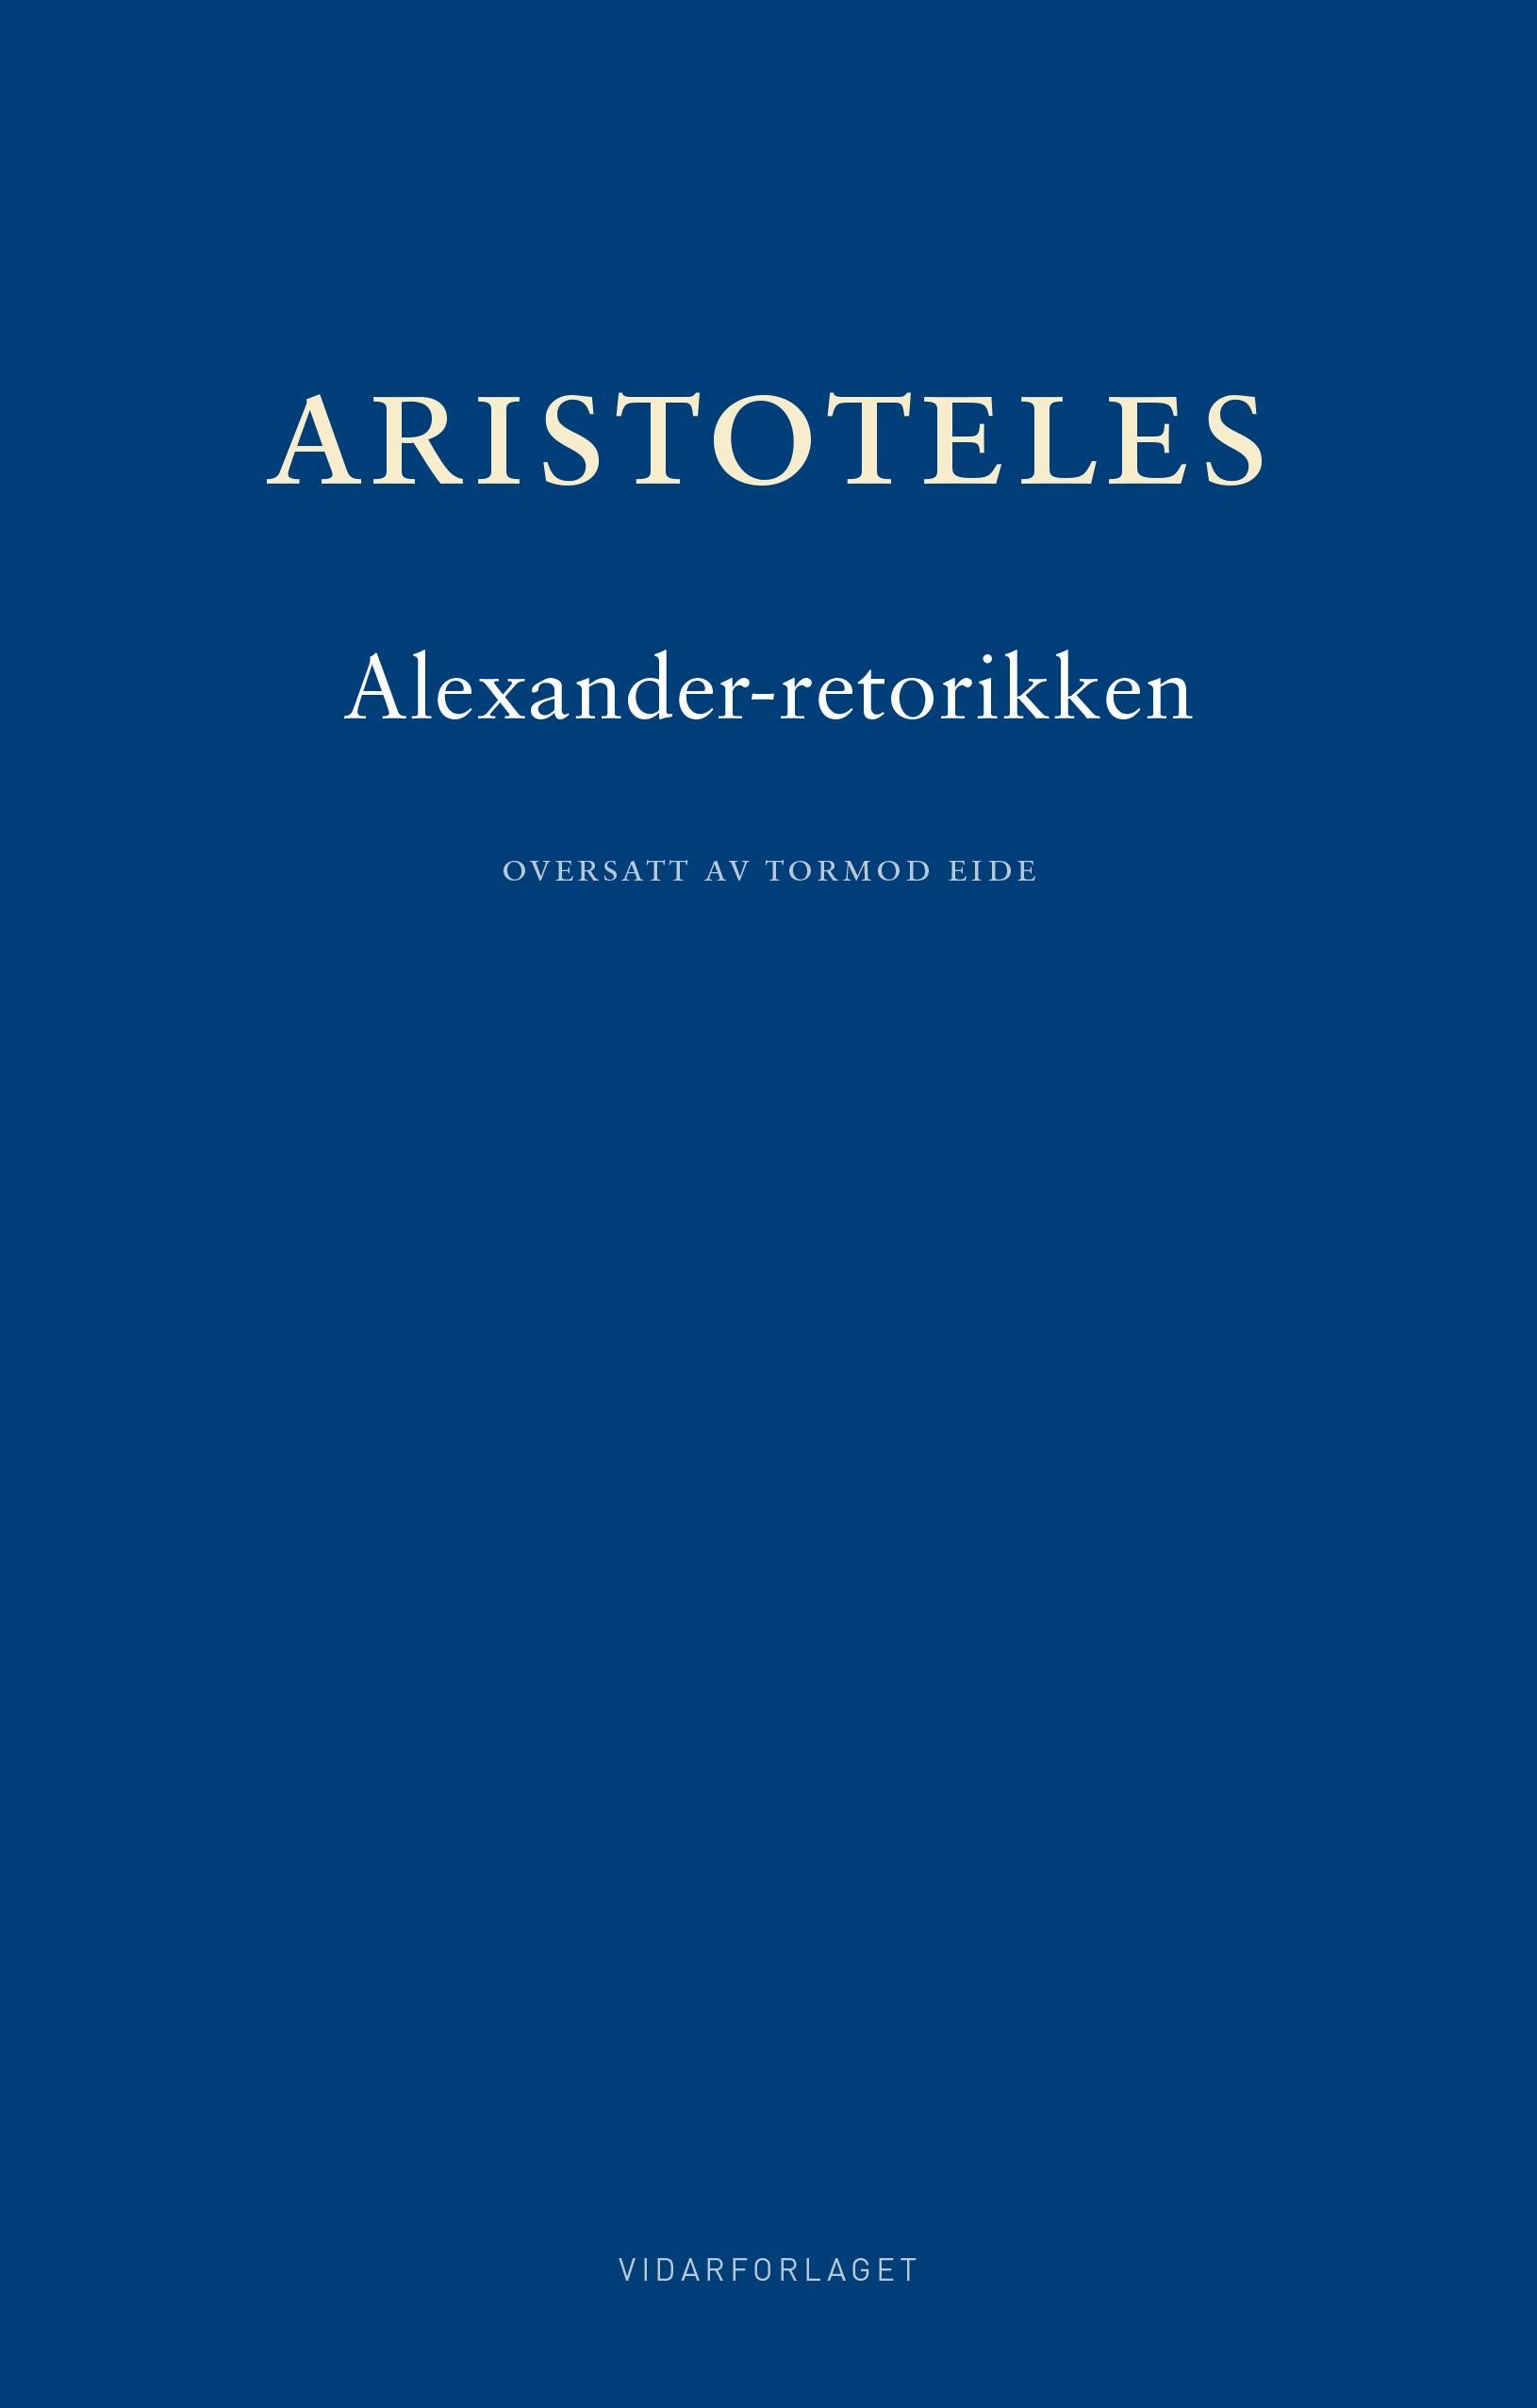 Aleksander-retorikken = Rhetorica ad Alexandrum